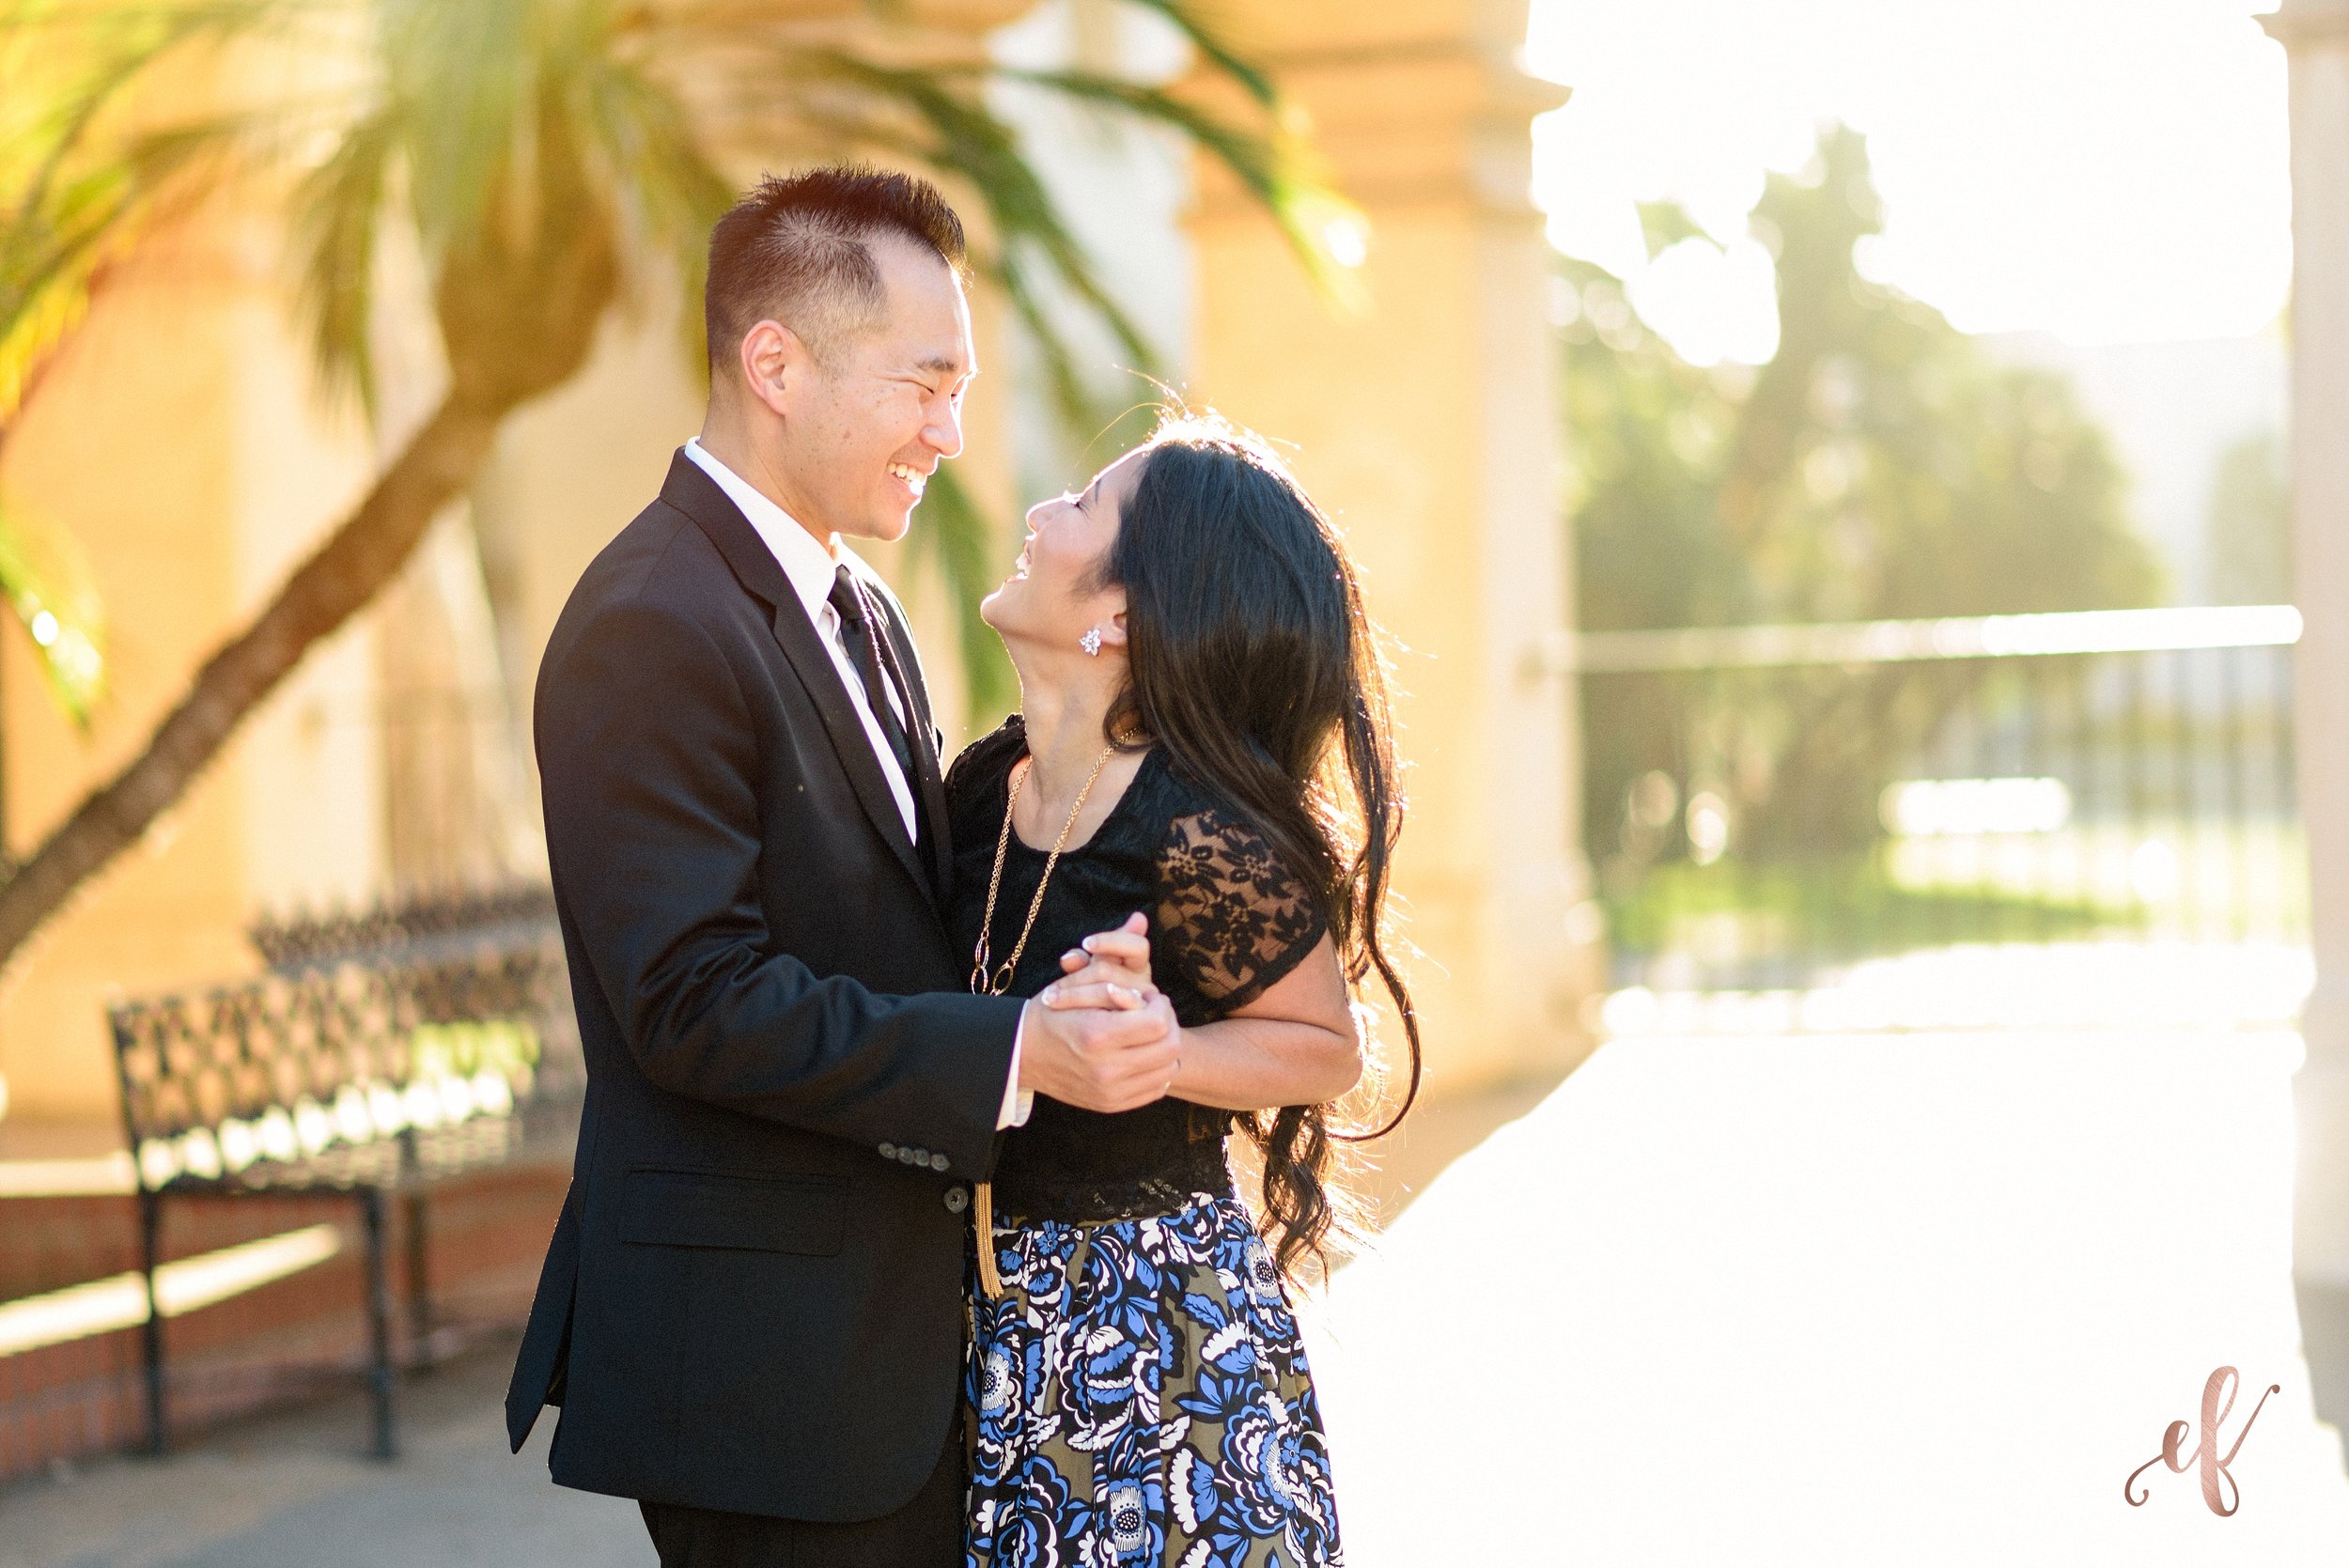 Balboa Park Engagement Photography | San Diego Portrait Photography 